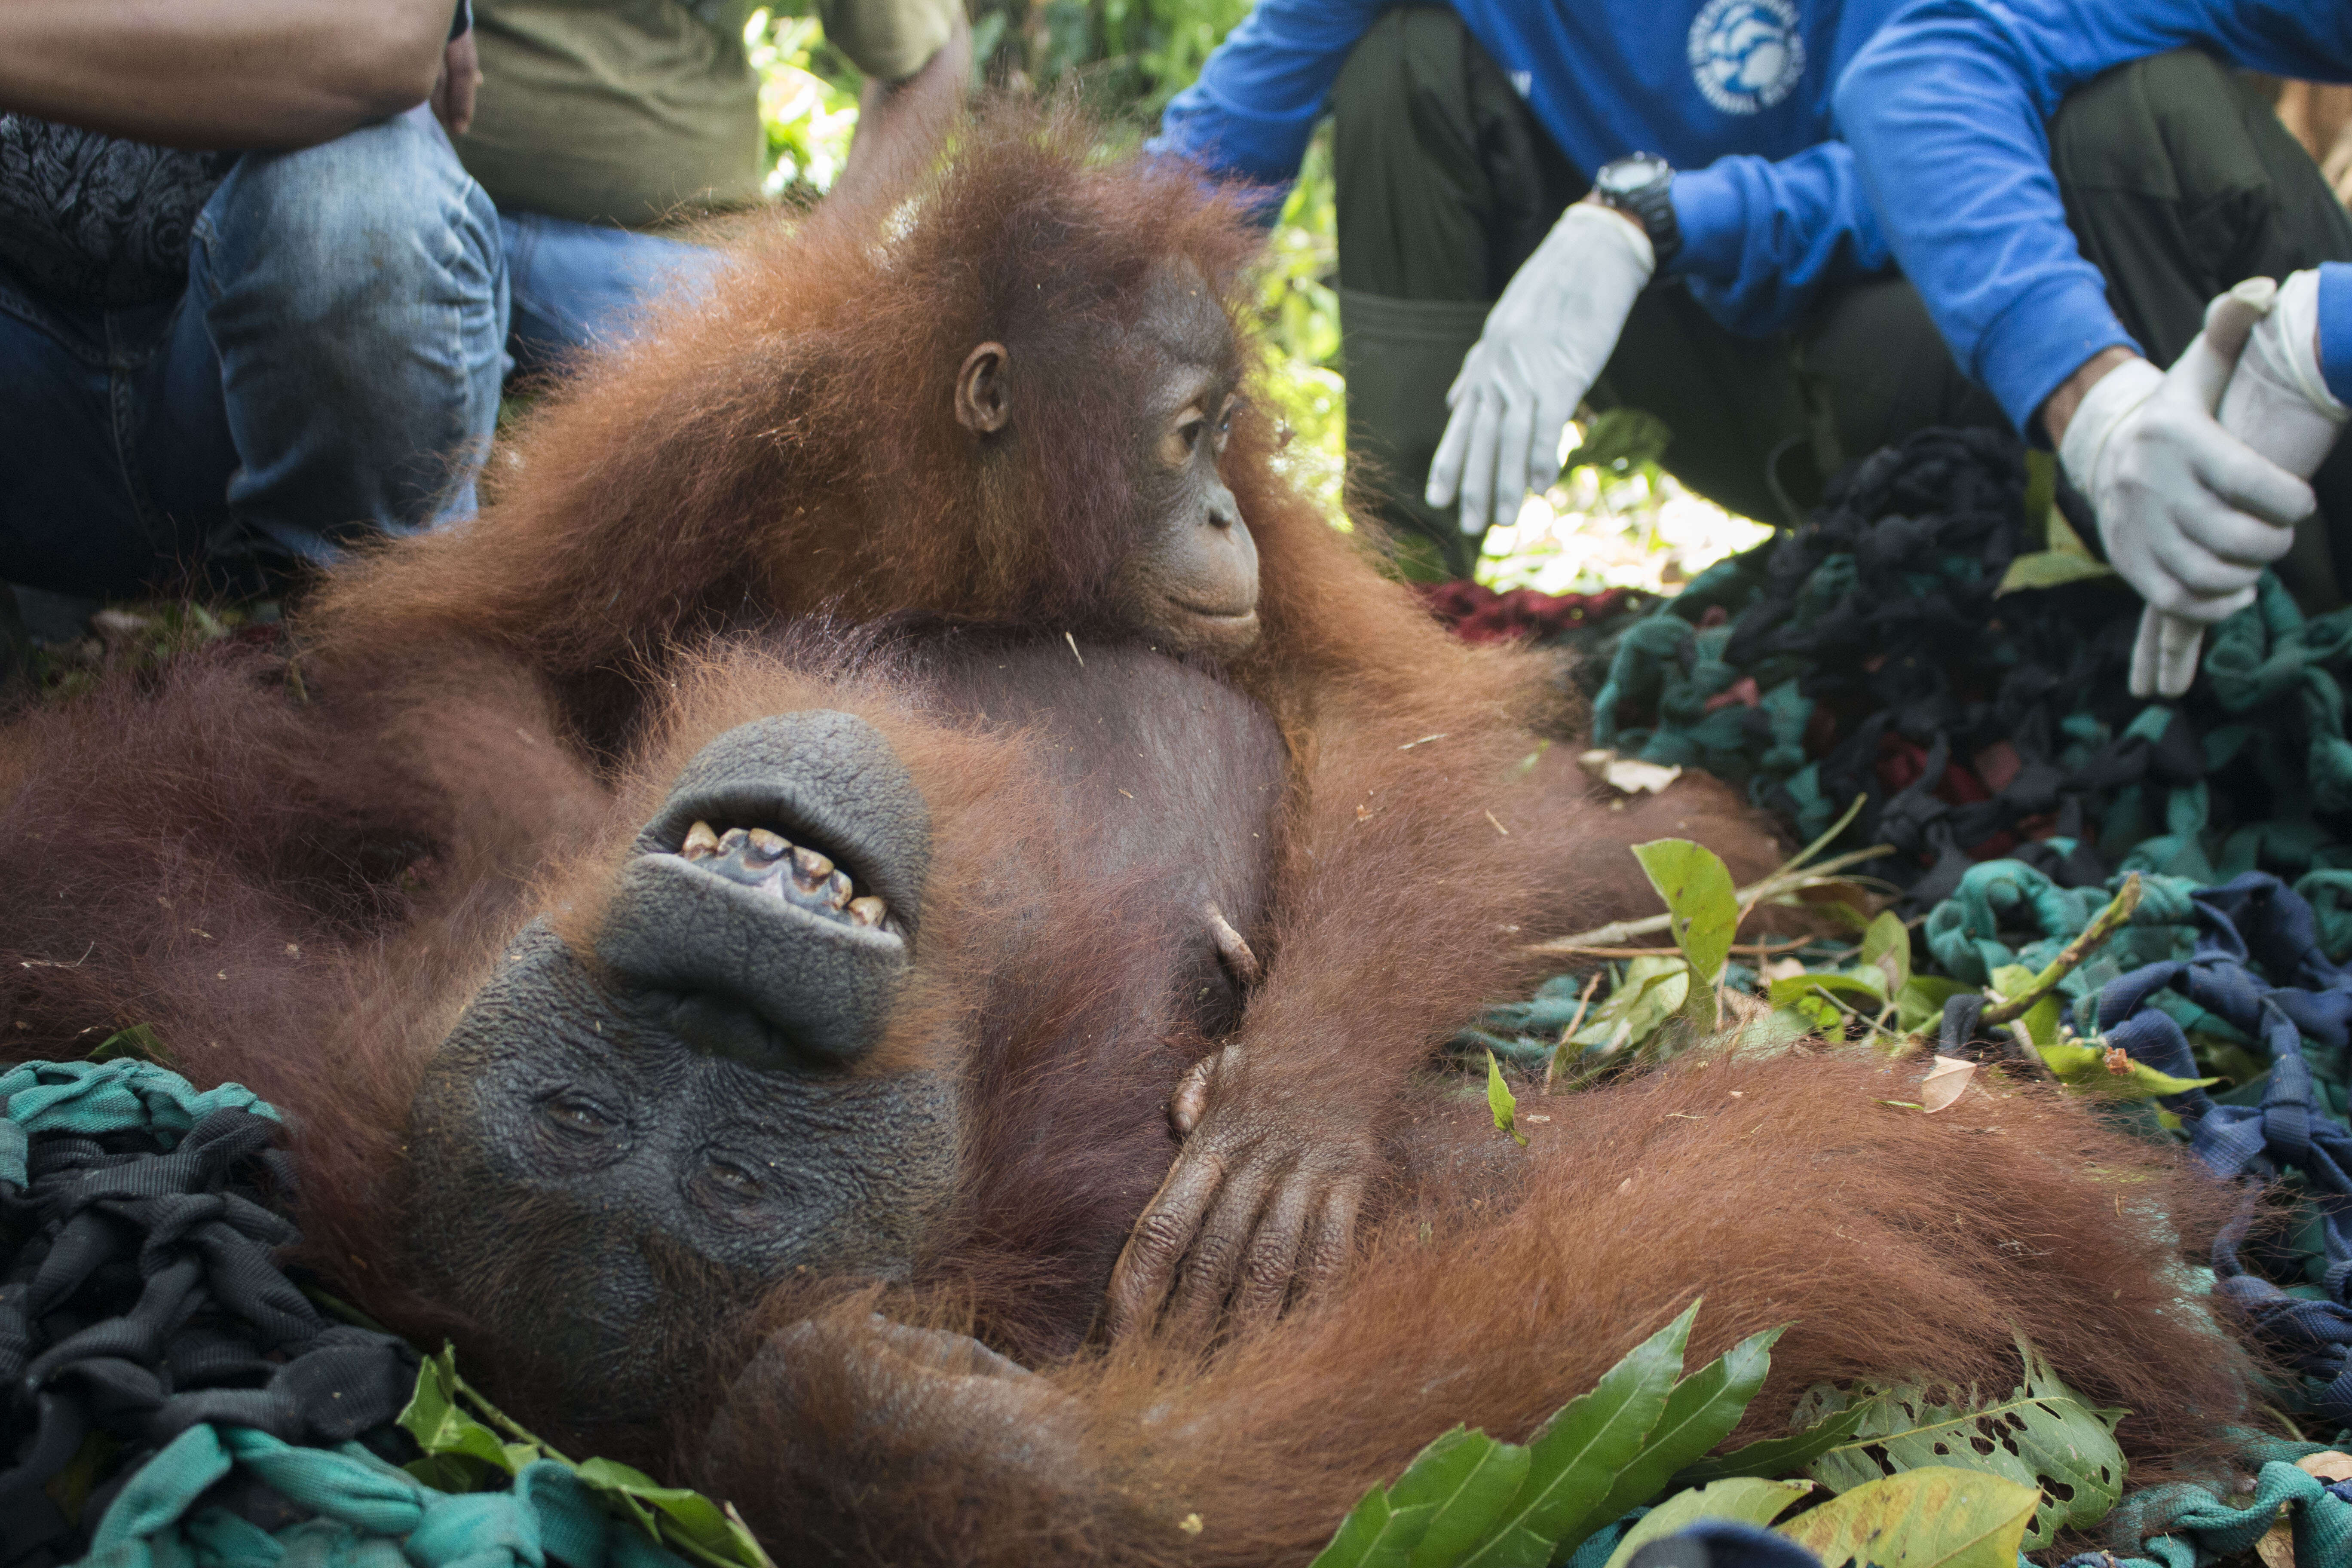 Baby orangutan holding onto mom